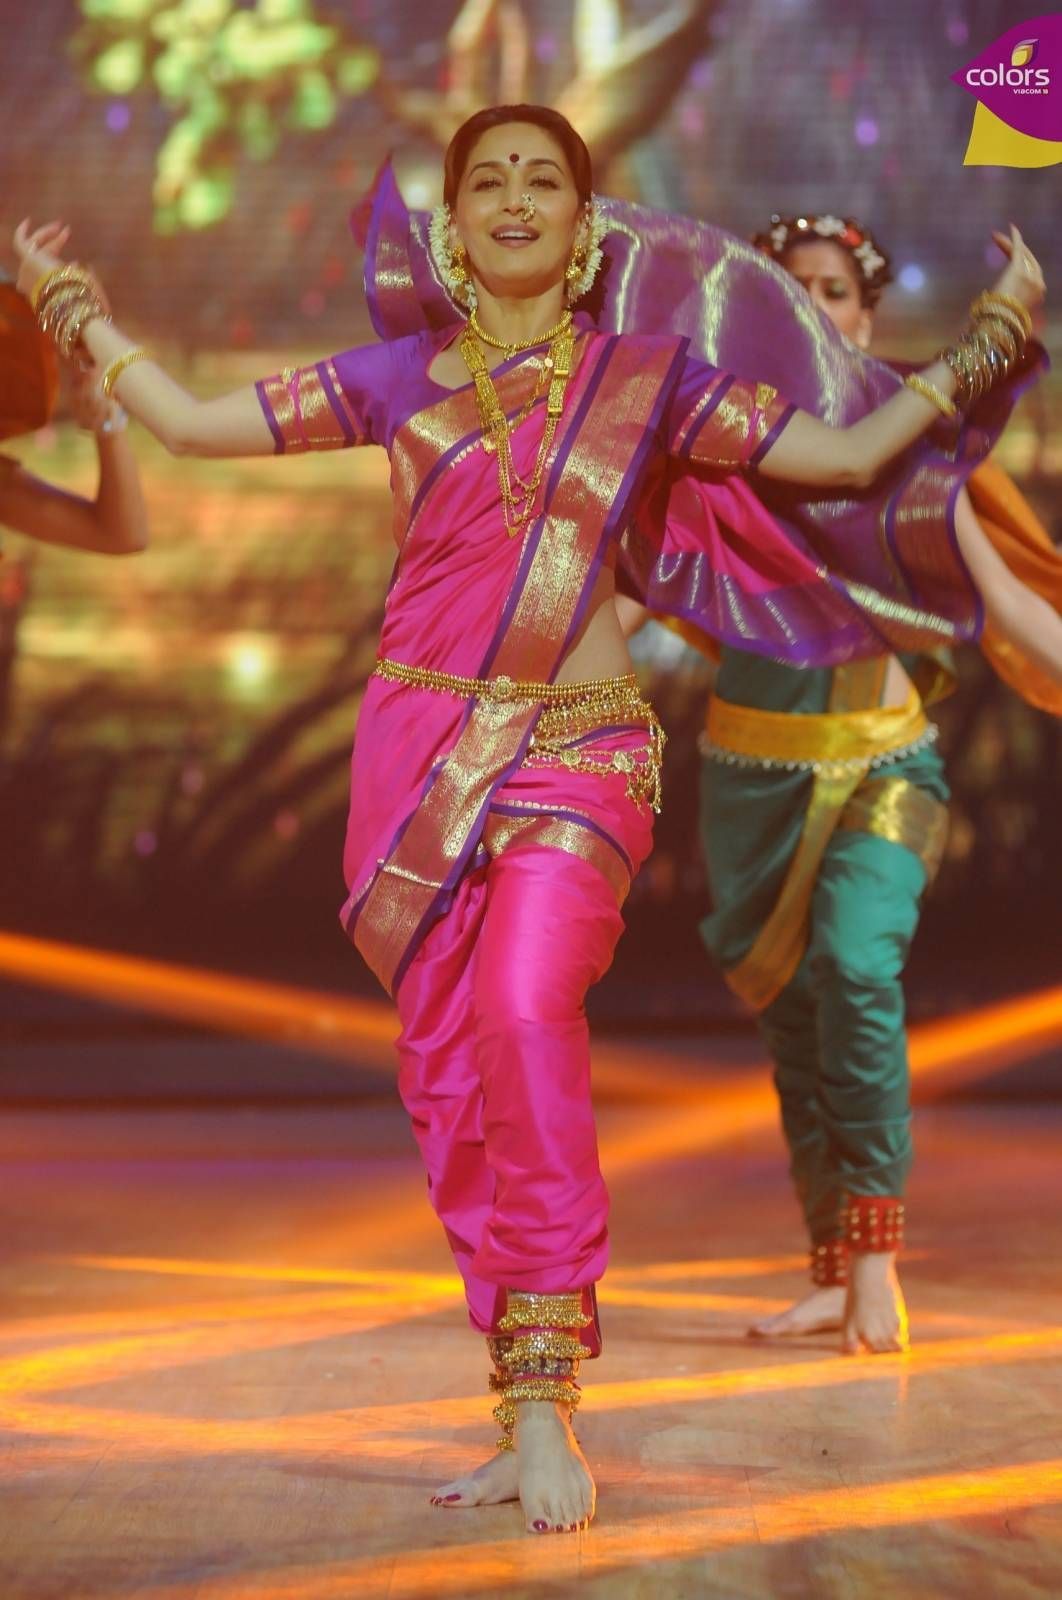 Madhuri Dixit doing the traditional Marathi dance